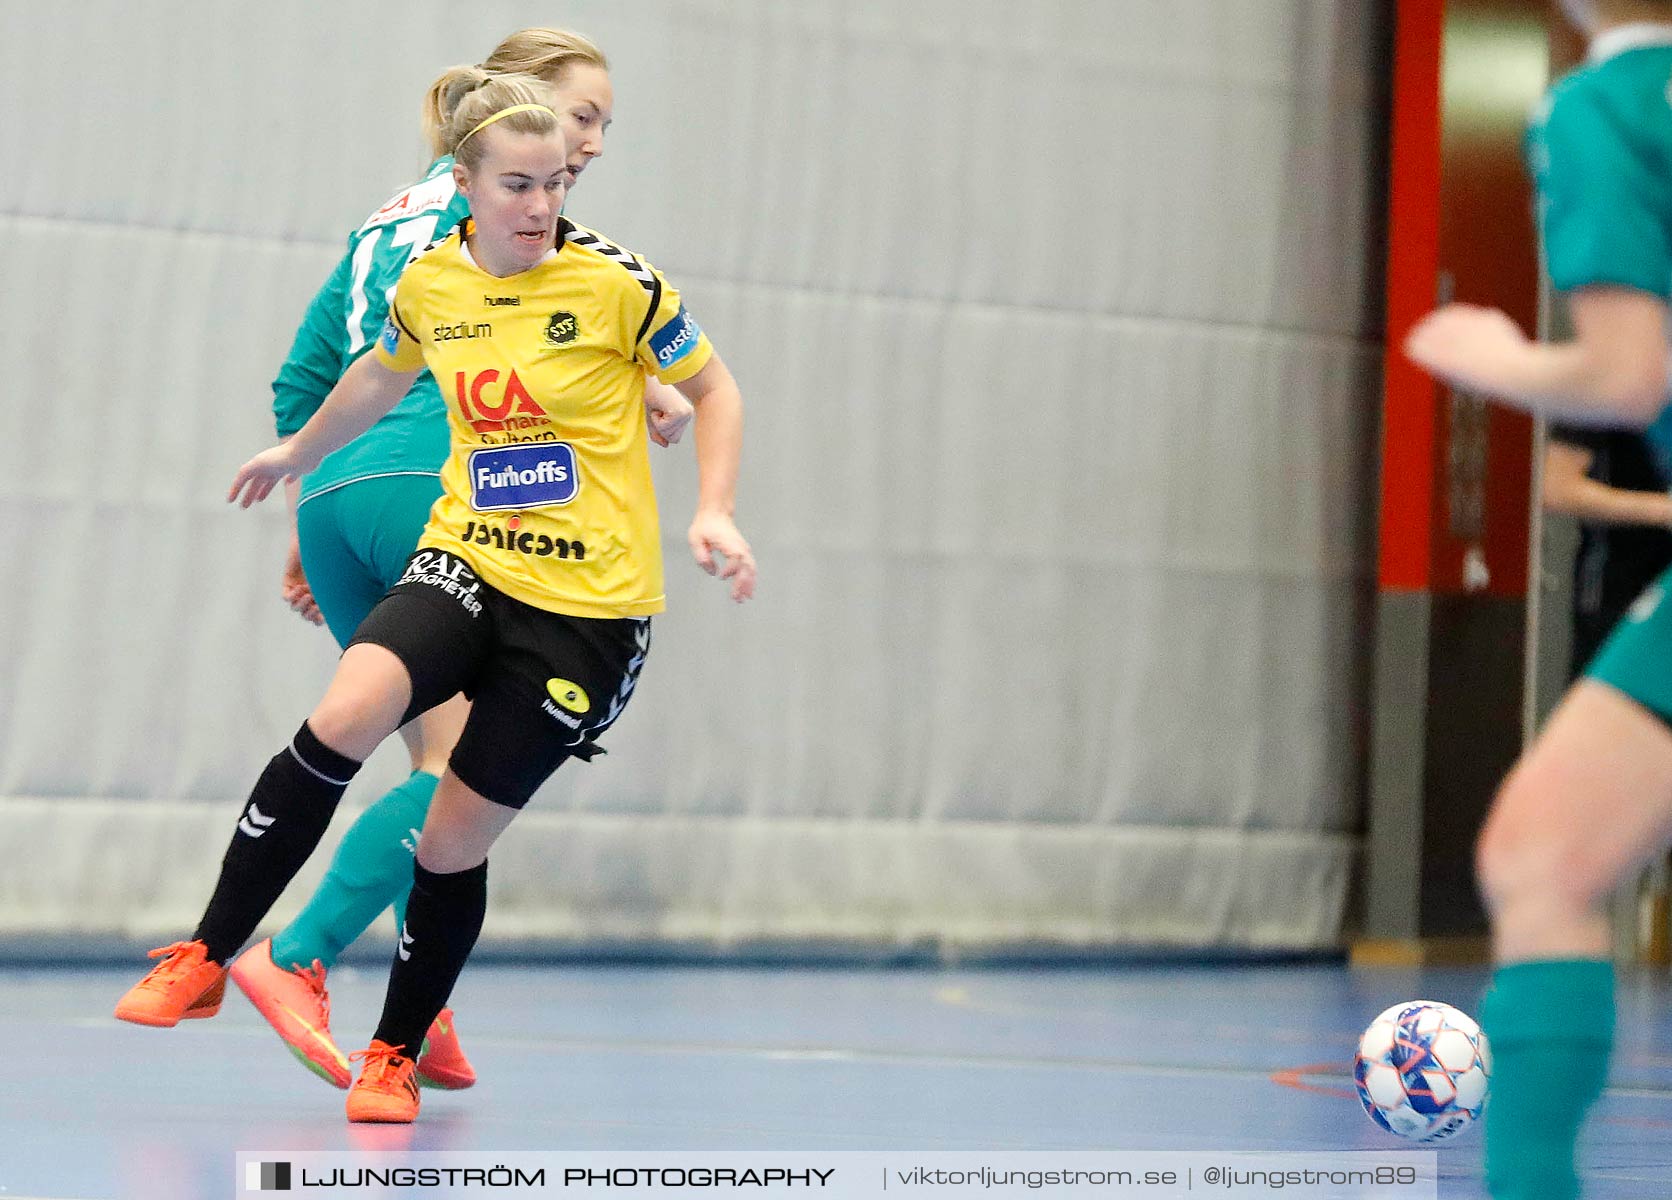 Skövde Futsalcup 2019 Damer Skultorps IF-Axvalls IF,dam,Arena Skövde,Skövde,Sverige,Futsal,,2019,227040